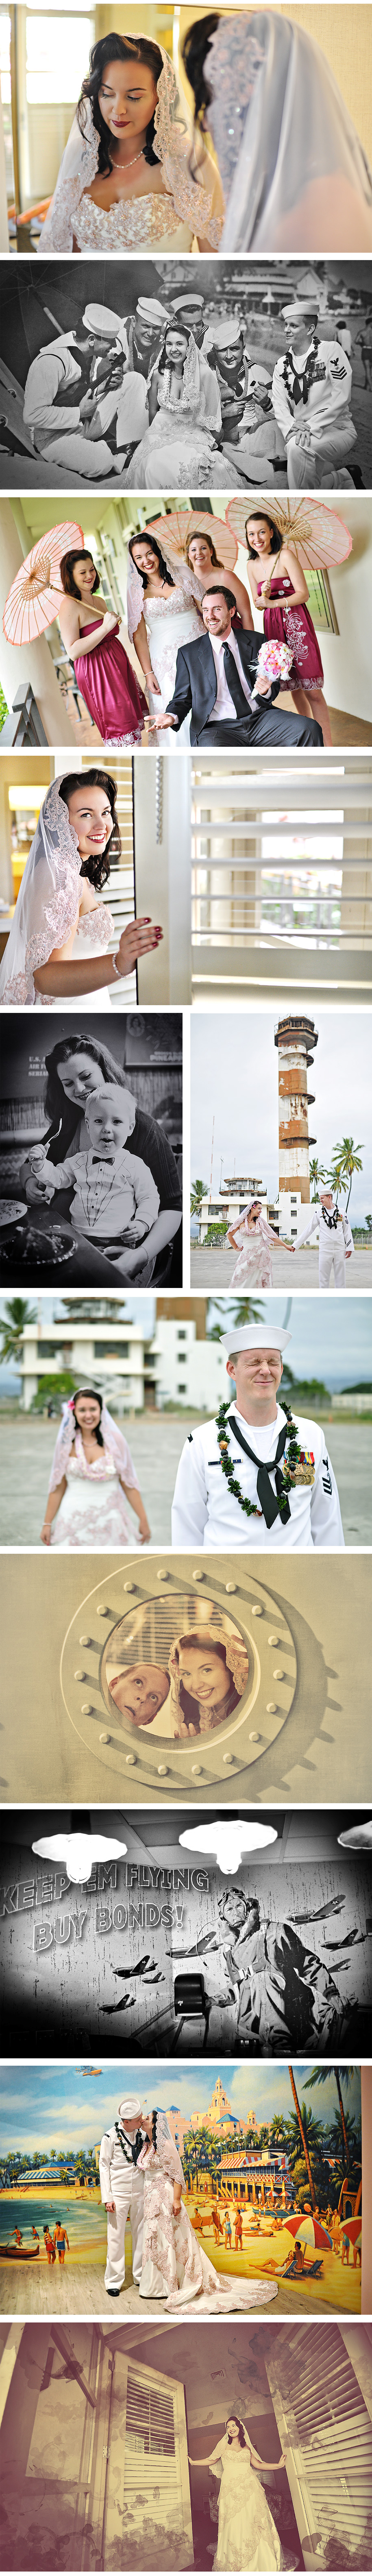 Stephen Ludwig Wedding Photography - Pearl Harbor Wedding - Part 2